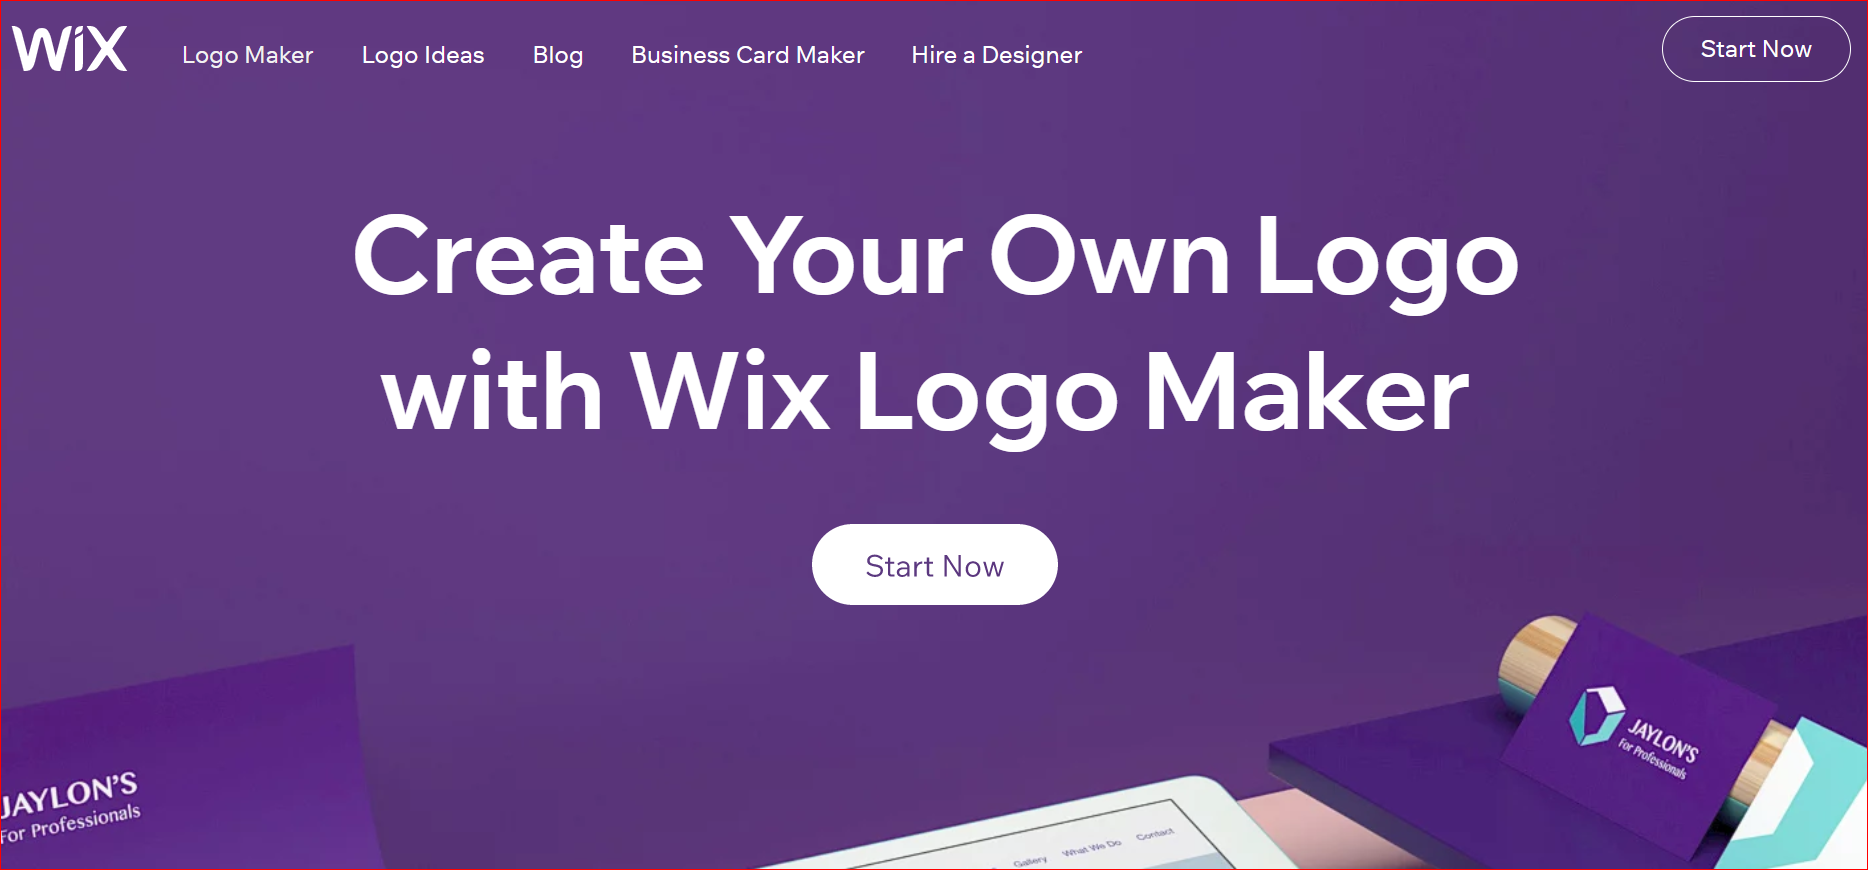 Wix Logo Maker In Nigeria Guide For Beginnenrs